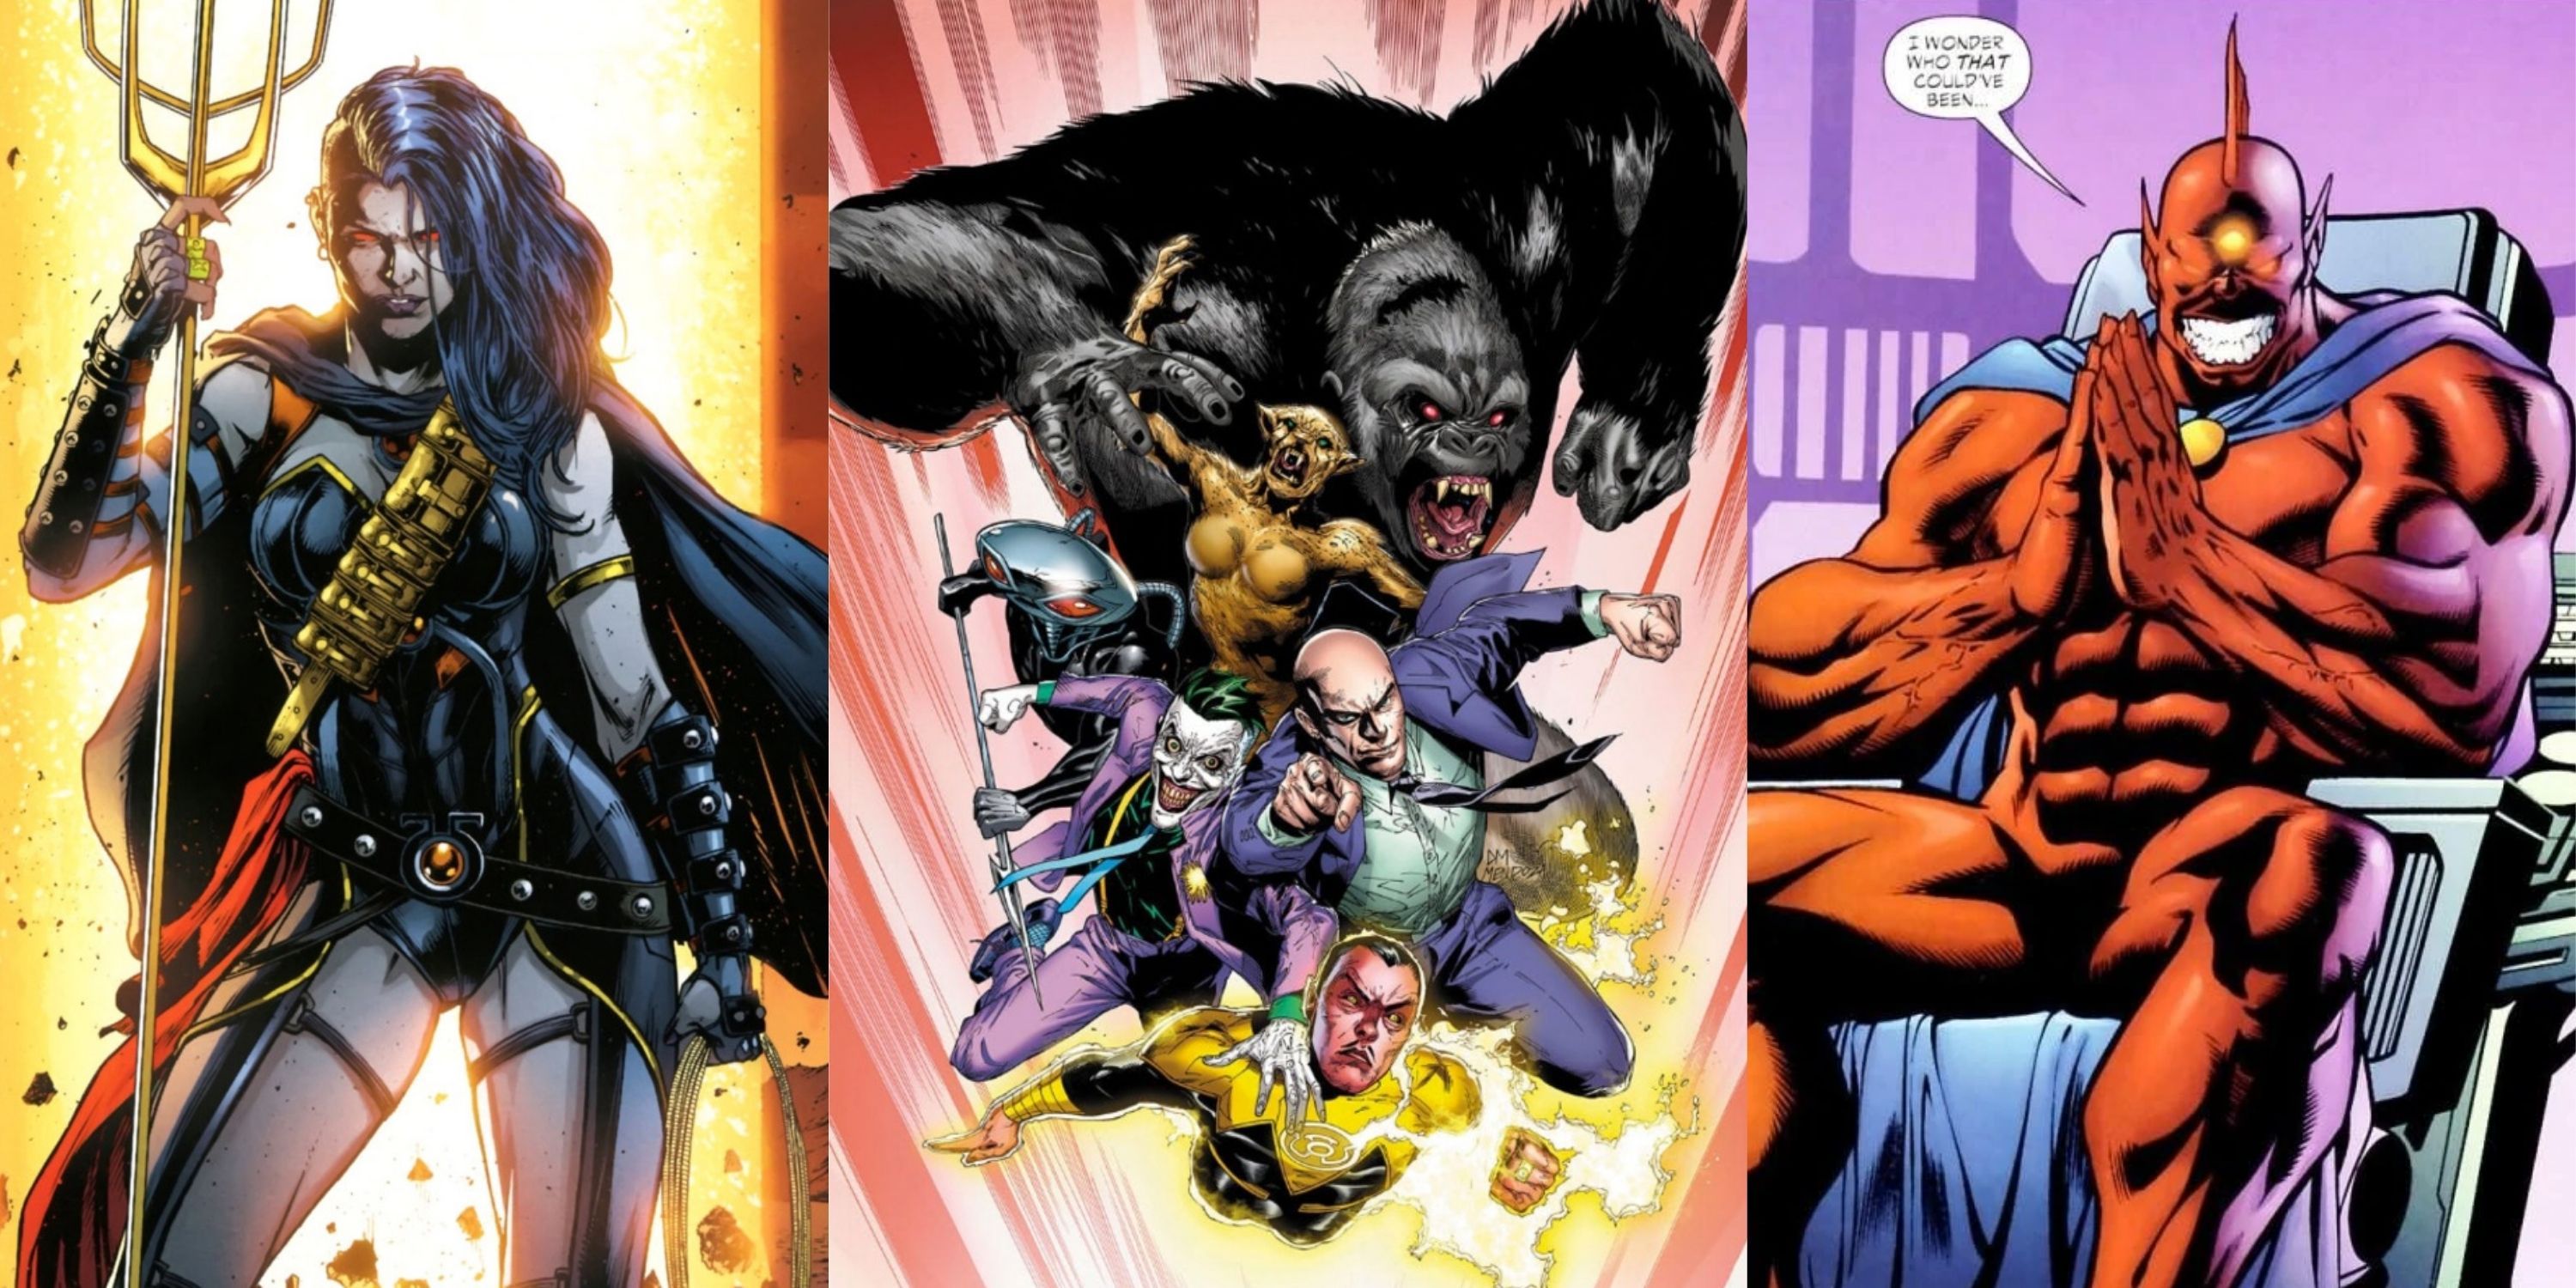 A Split Image of Justice League Villains Who Should Join The DCEU